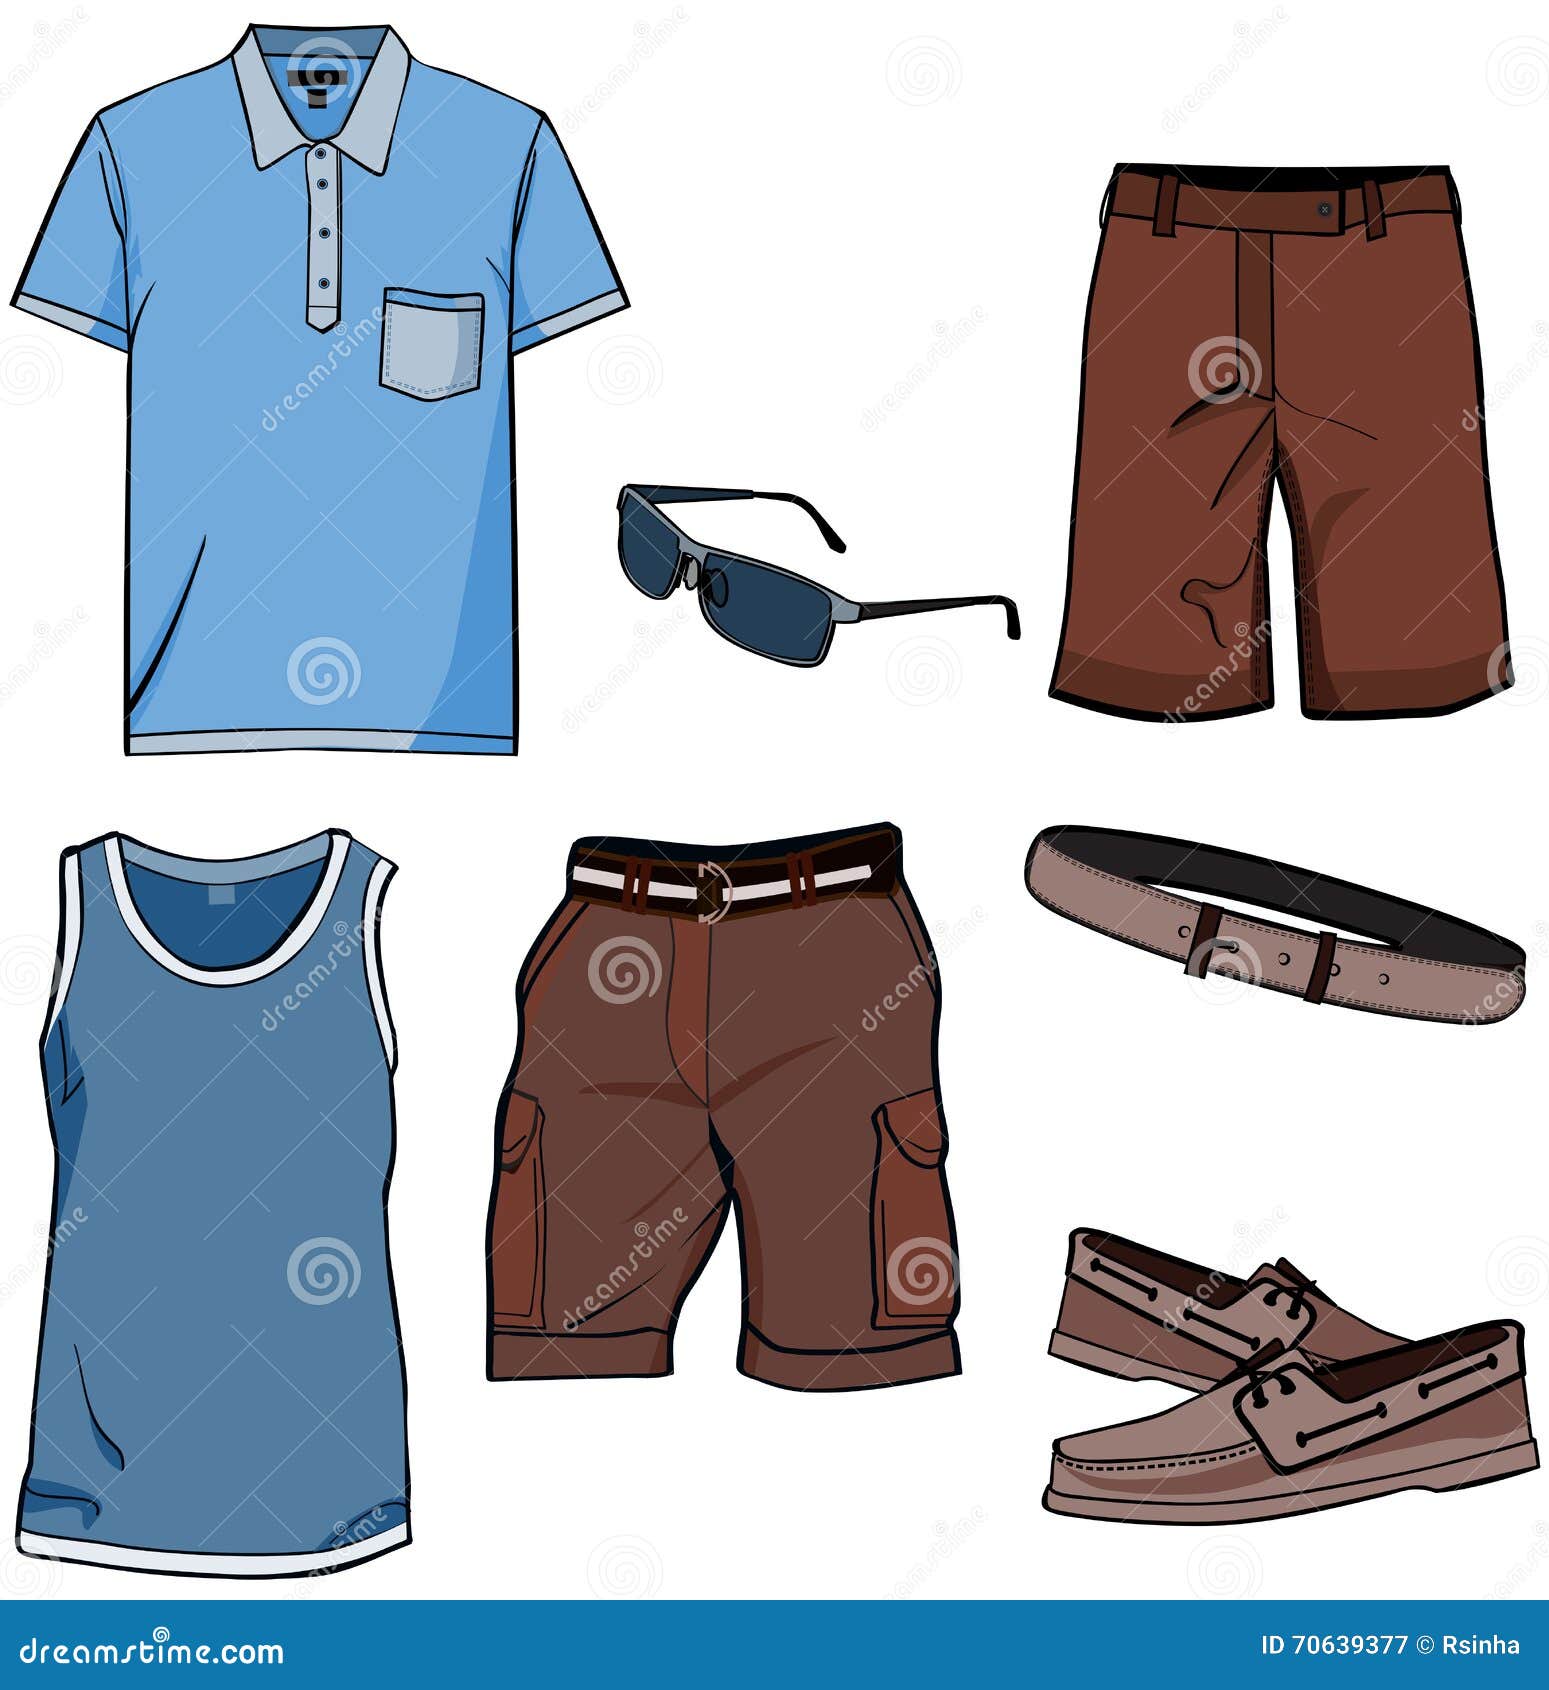 https://thumbs.dreamstime.com/z/men-s-clothes-summer-accessories-t-shirt-polo-shorts-sun-glasses-casual-shoes-belt-wear-vector-70639377.jpg